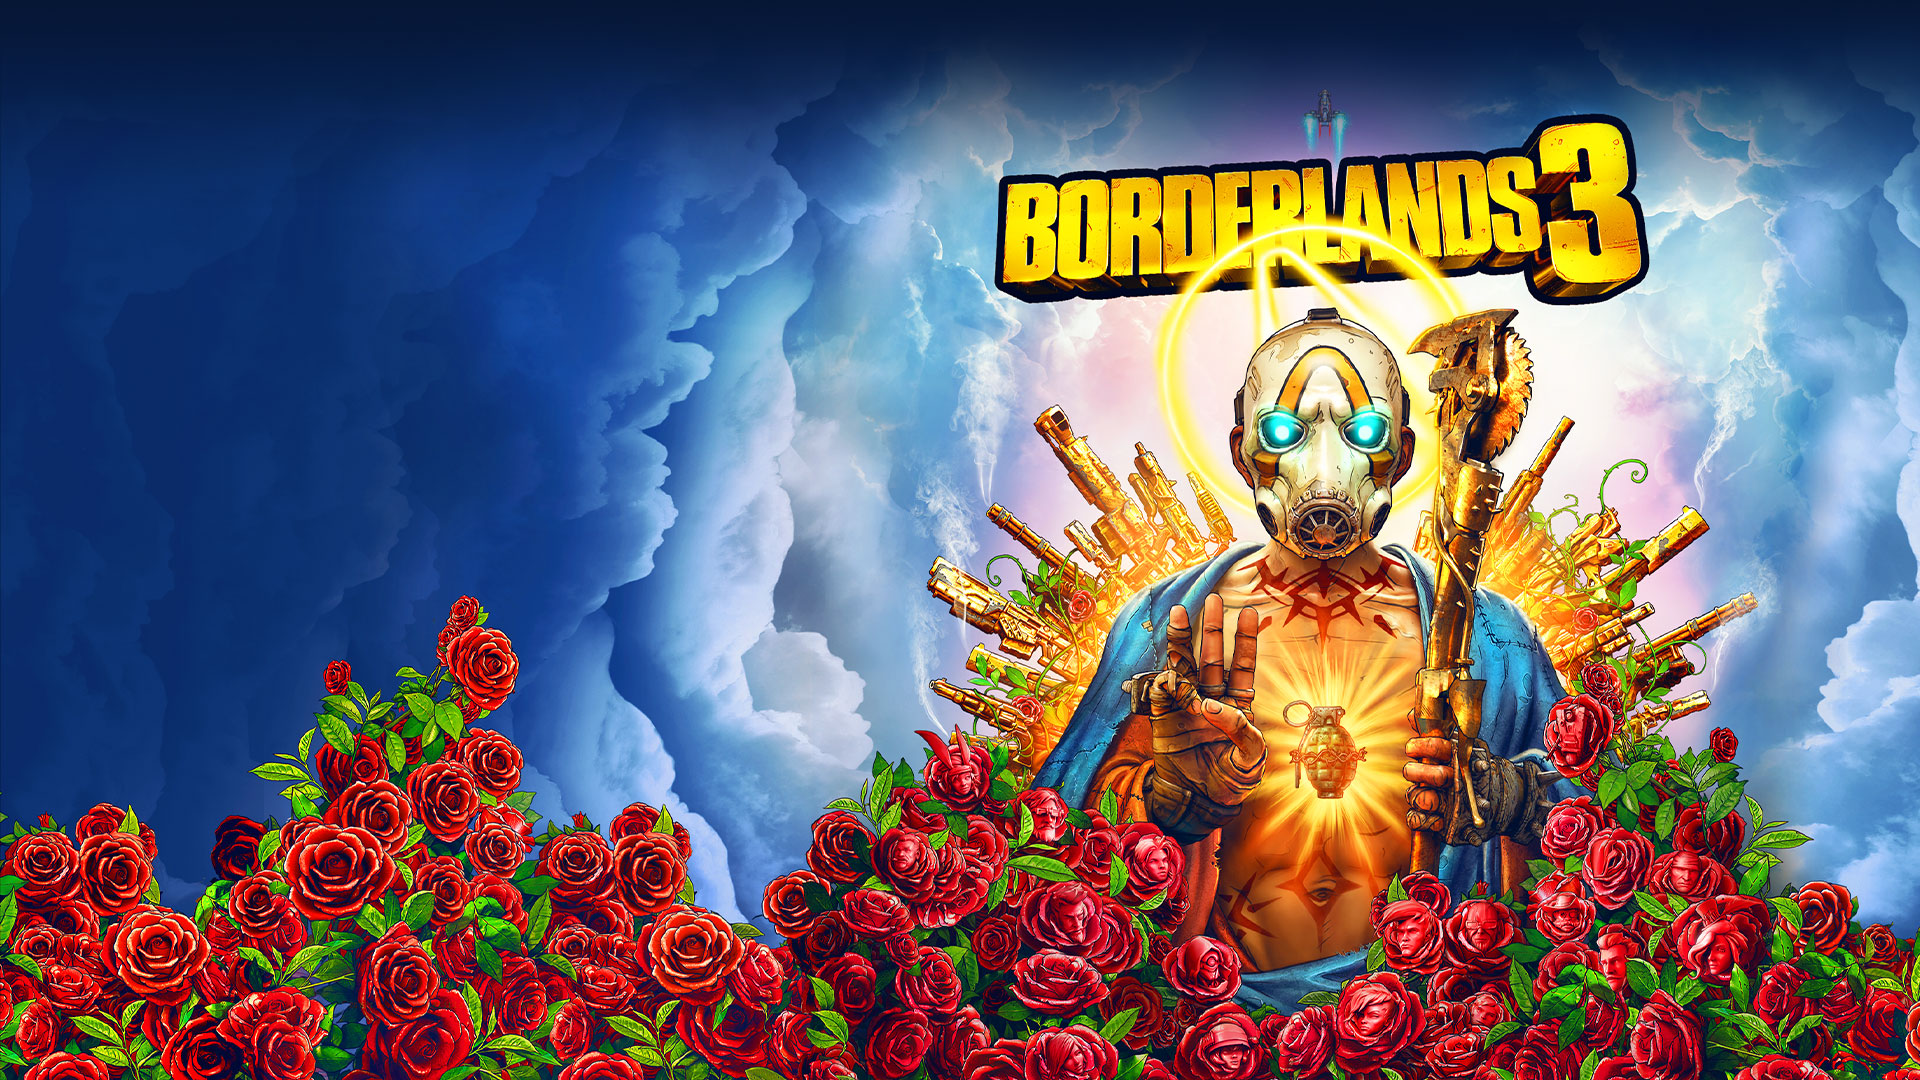 Borderlands 3 super deluxe edition